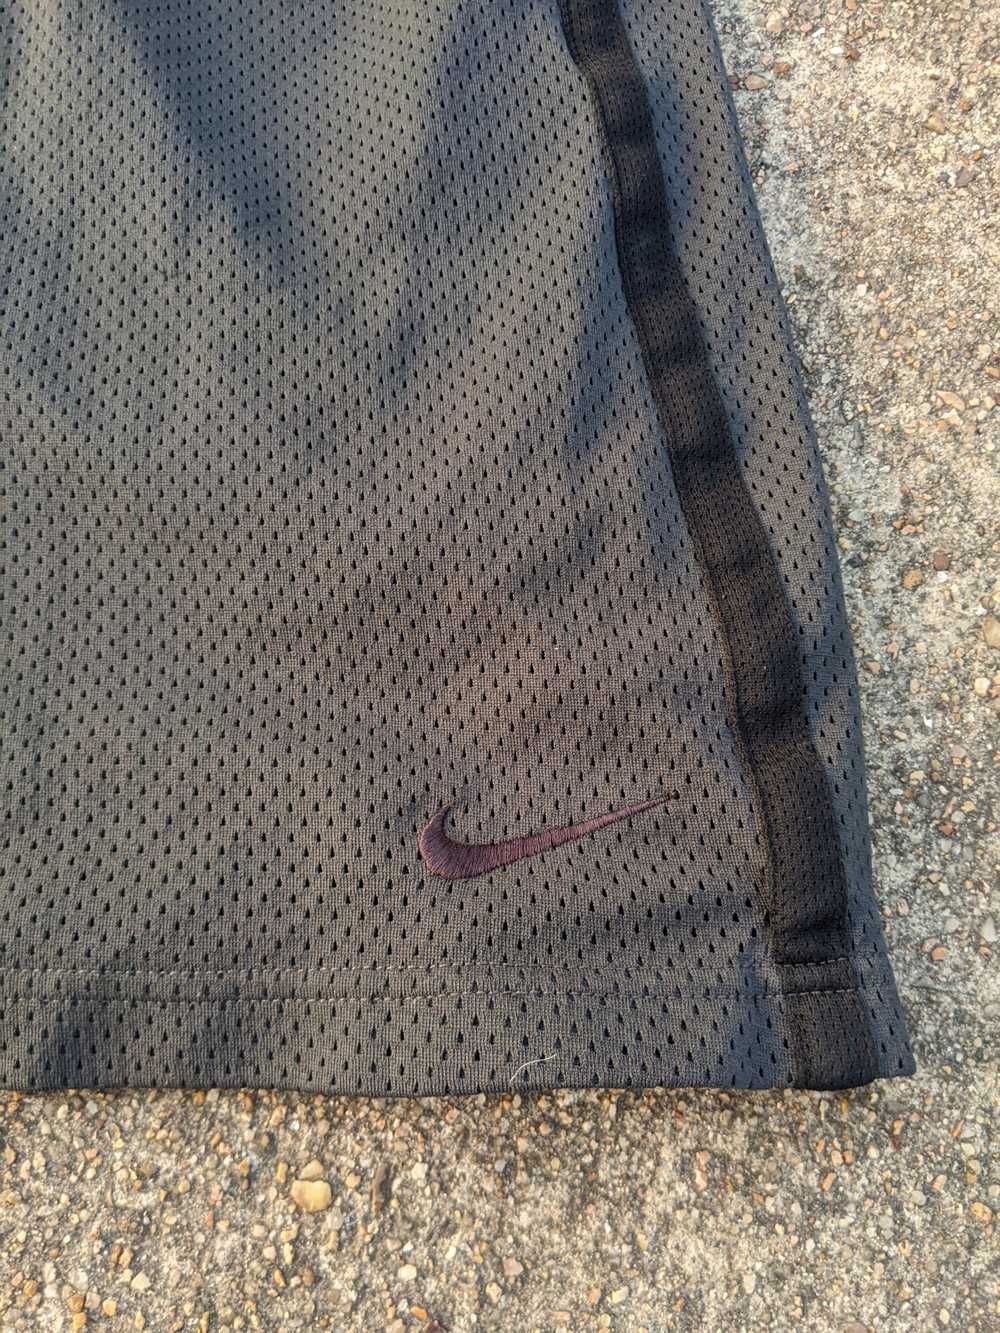 Nike Nike grey mesh sport shorts size XL shipping… - image 4